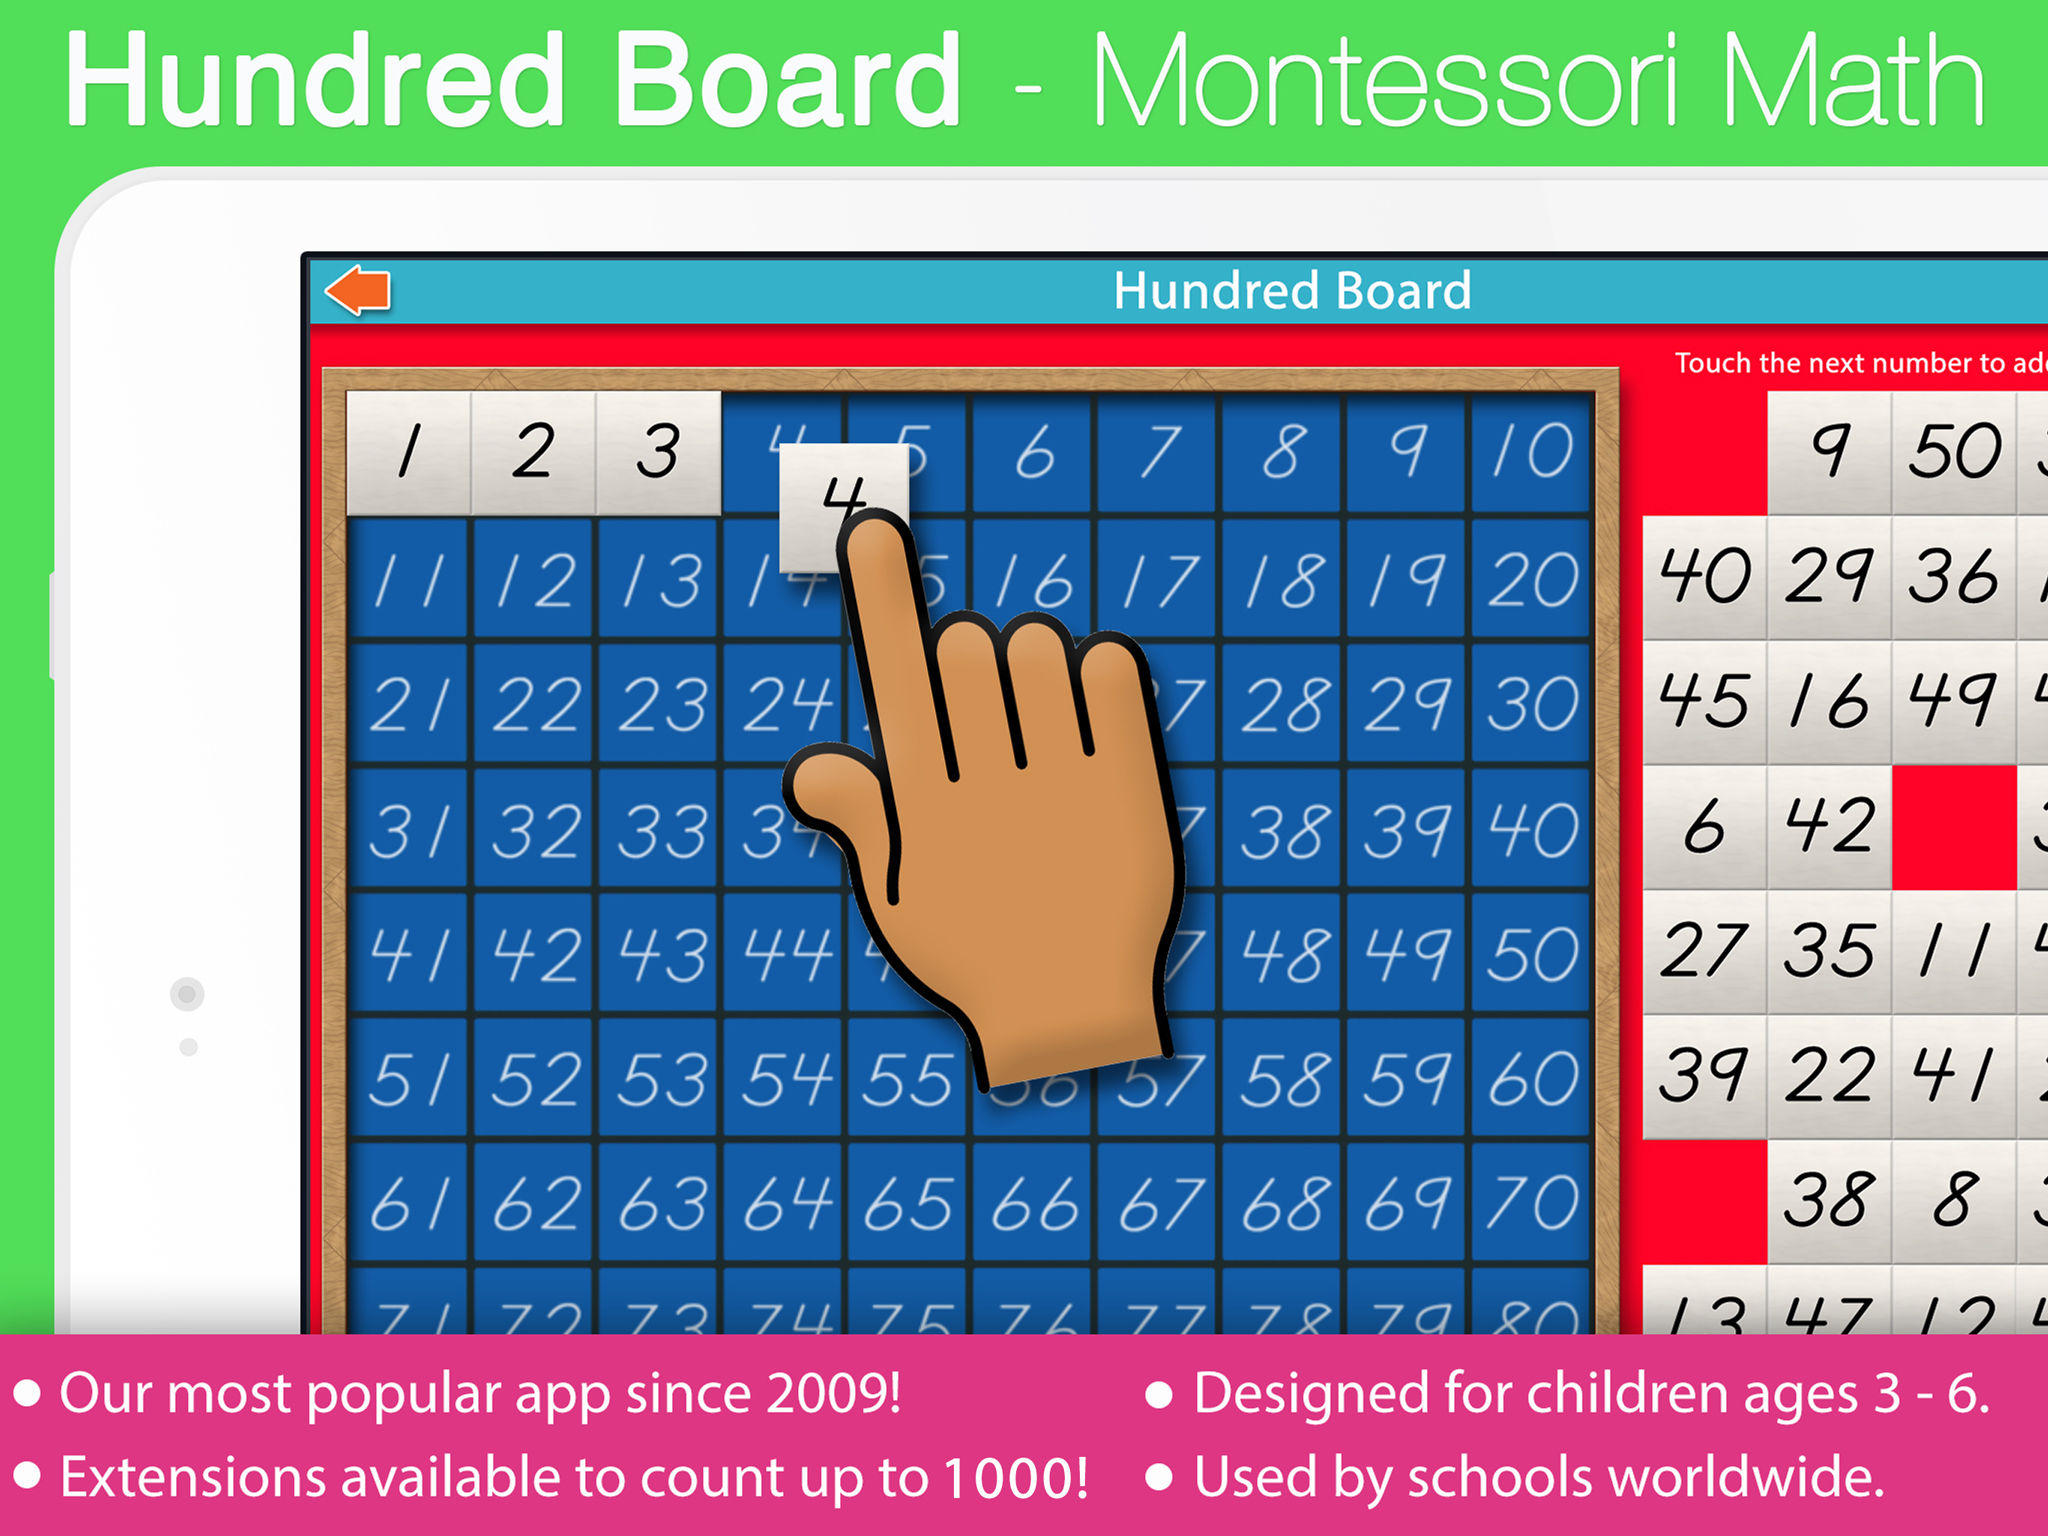 MontessoriHundredBoardapp-1.jpg